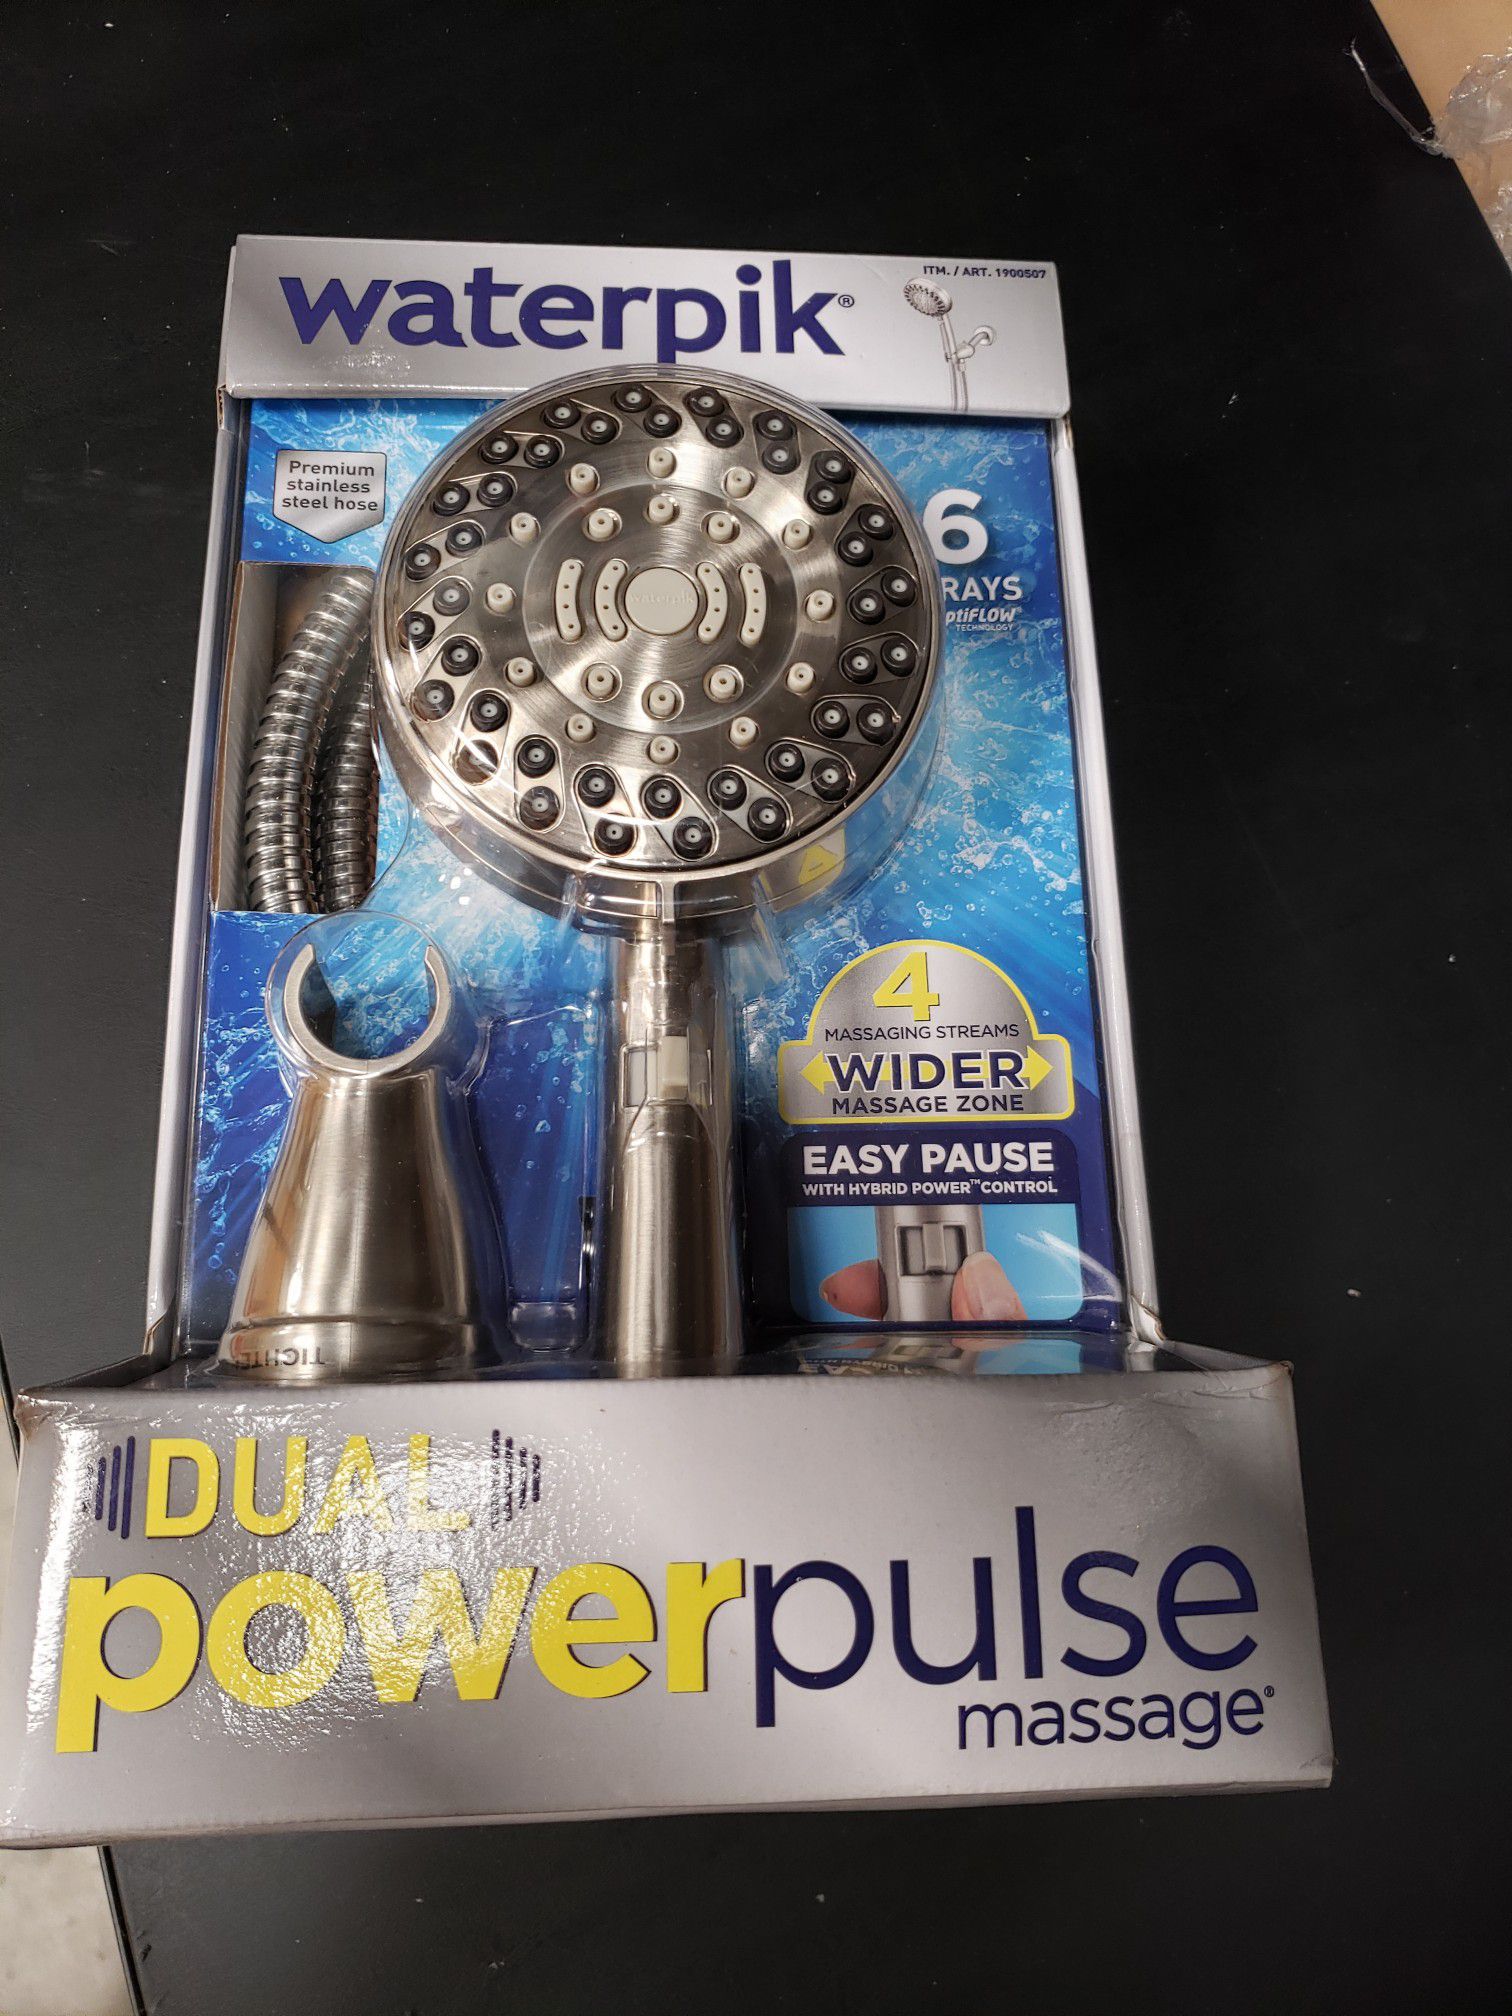 Waterpik dual power pulse massage hand held shower head